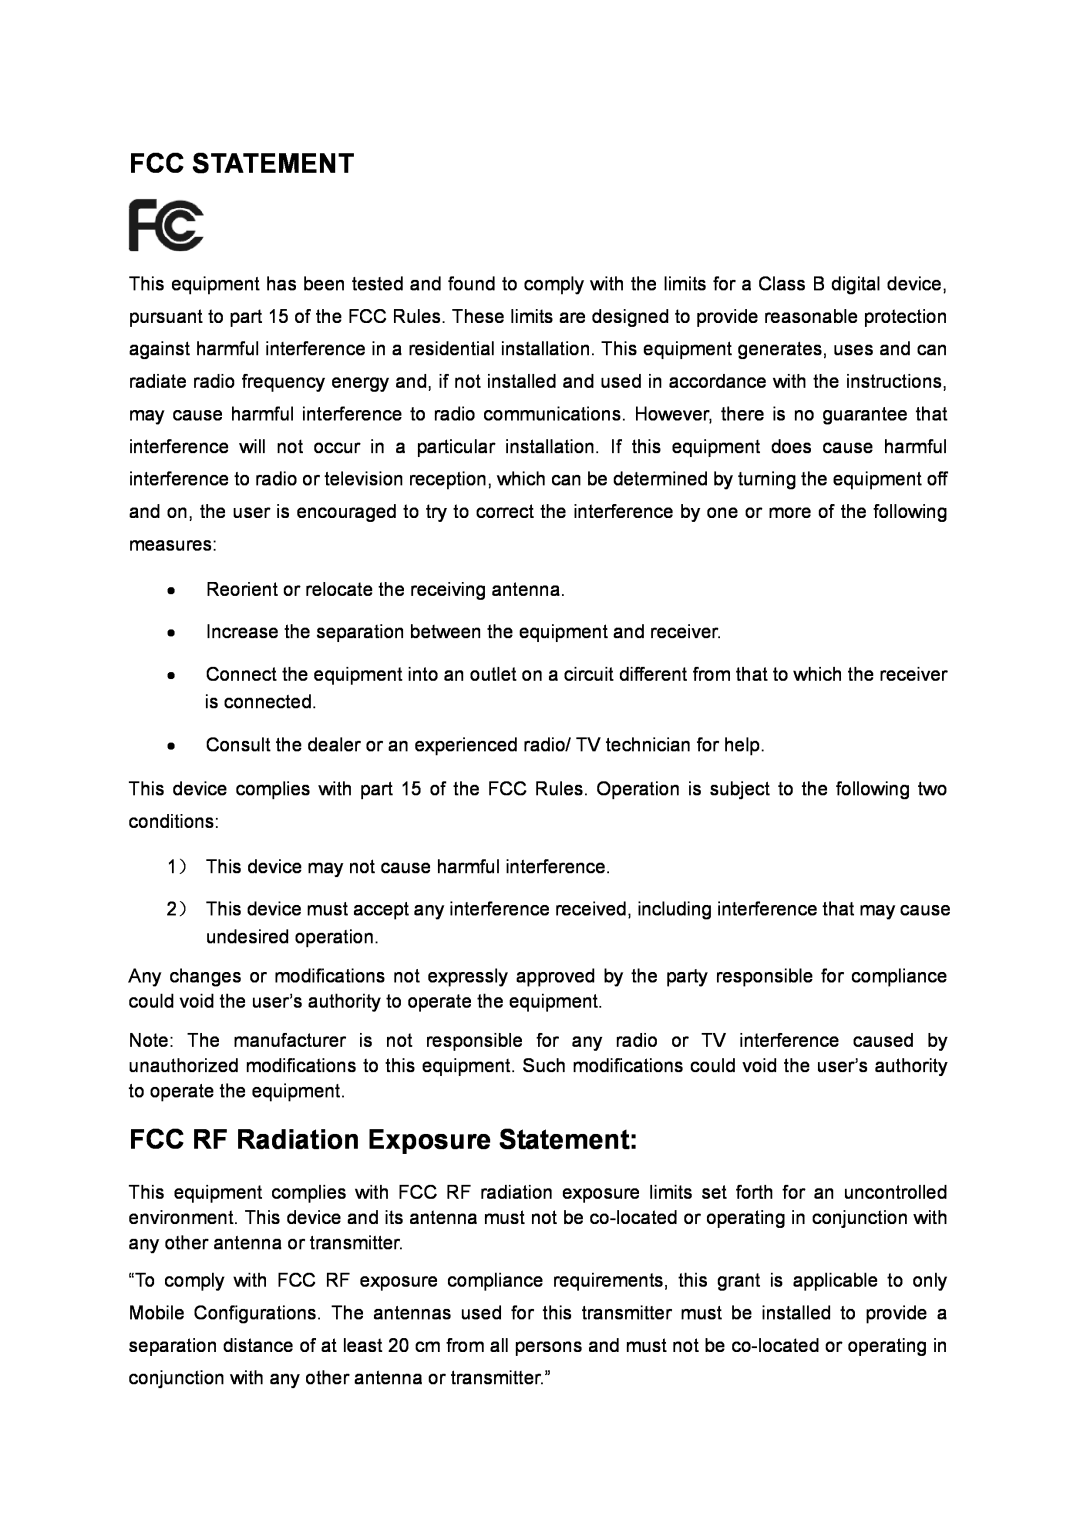 TP-Link TL-WDR4300 manual Fcc Statement, FCC RF Radiation Exposure Statement 